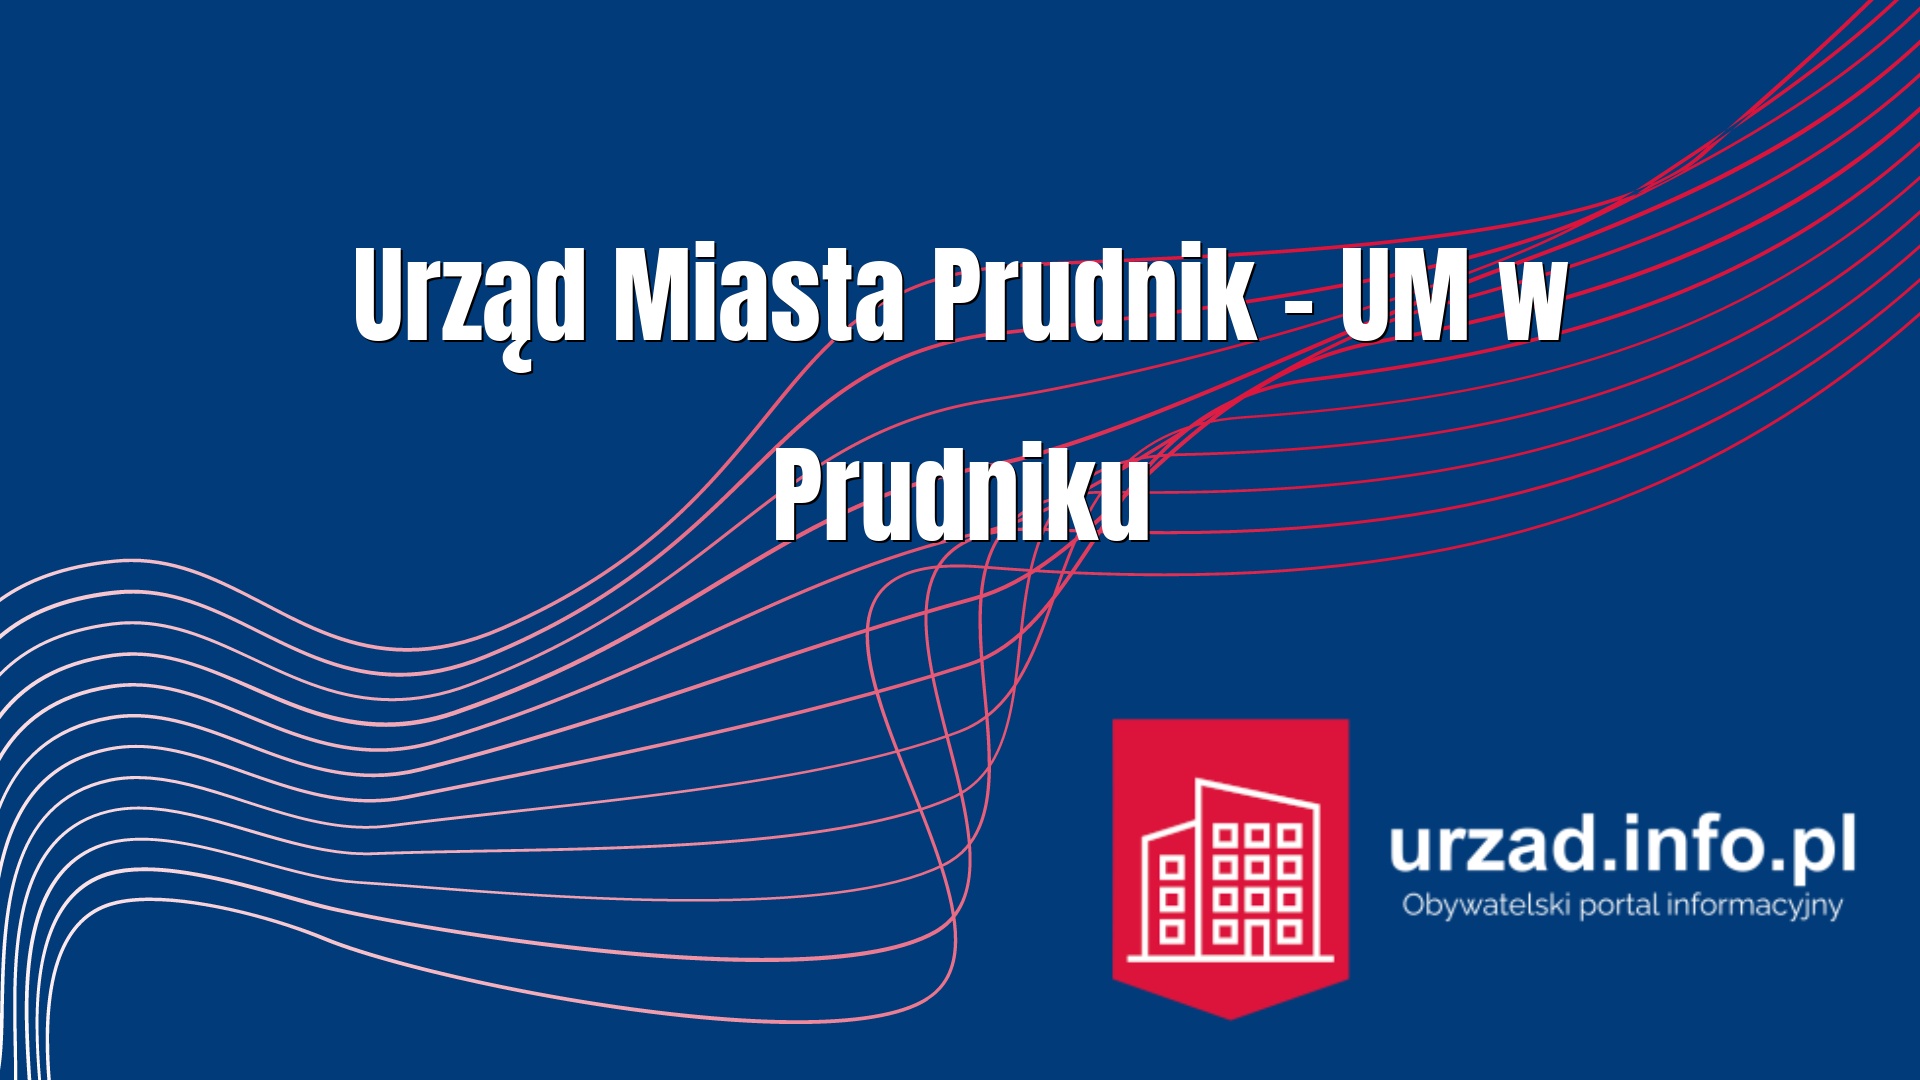 Urząd Miasta Prudnik – UM w Prudniku